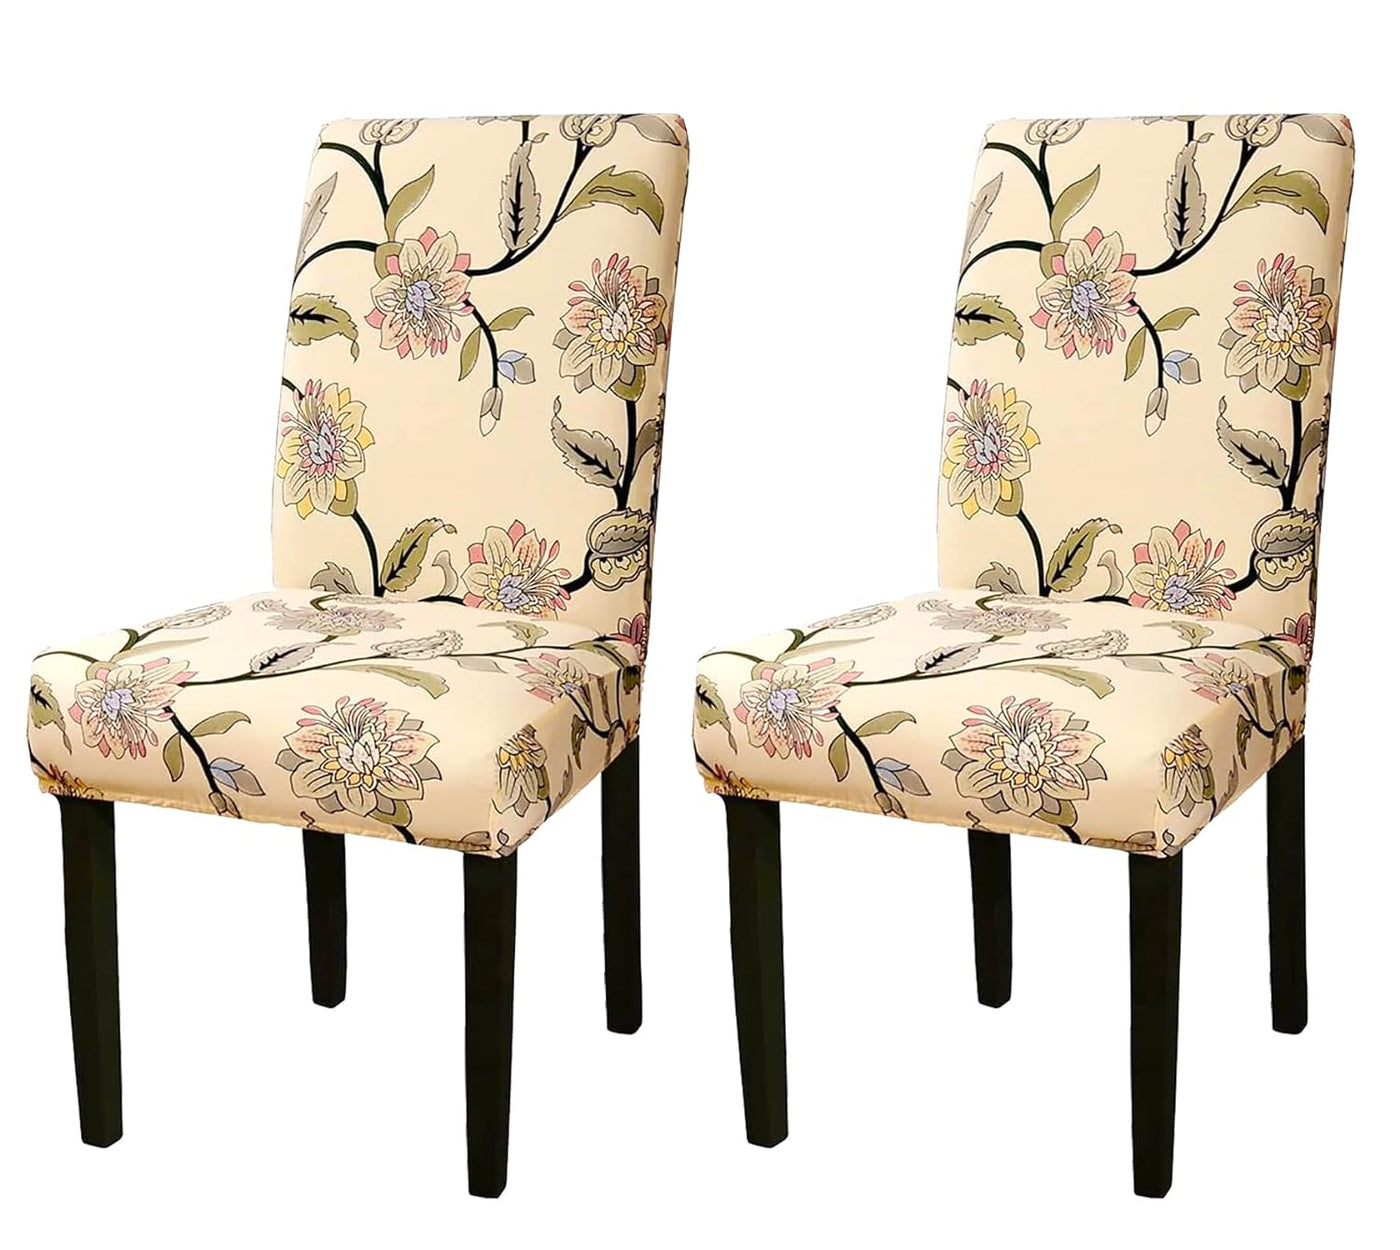 Printed Elastic Chair Cover (Beige Magnolia)